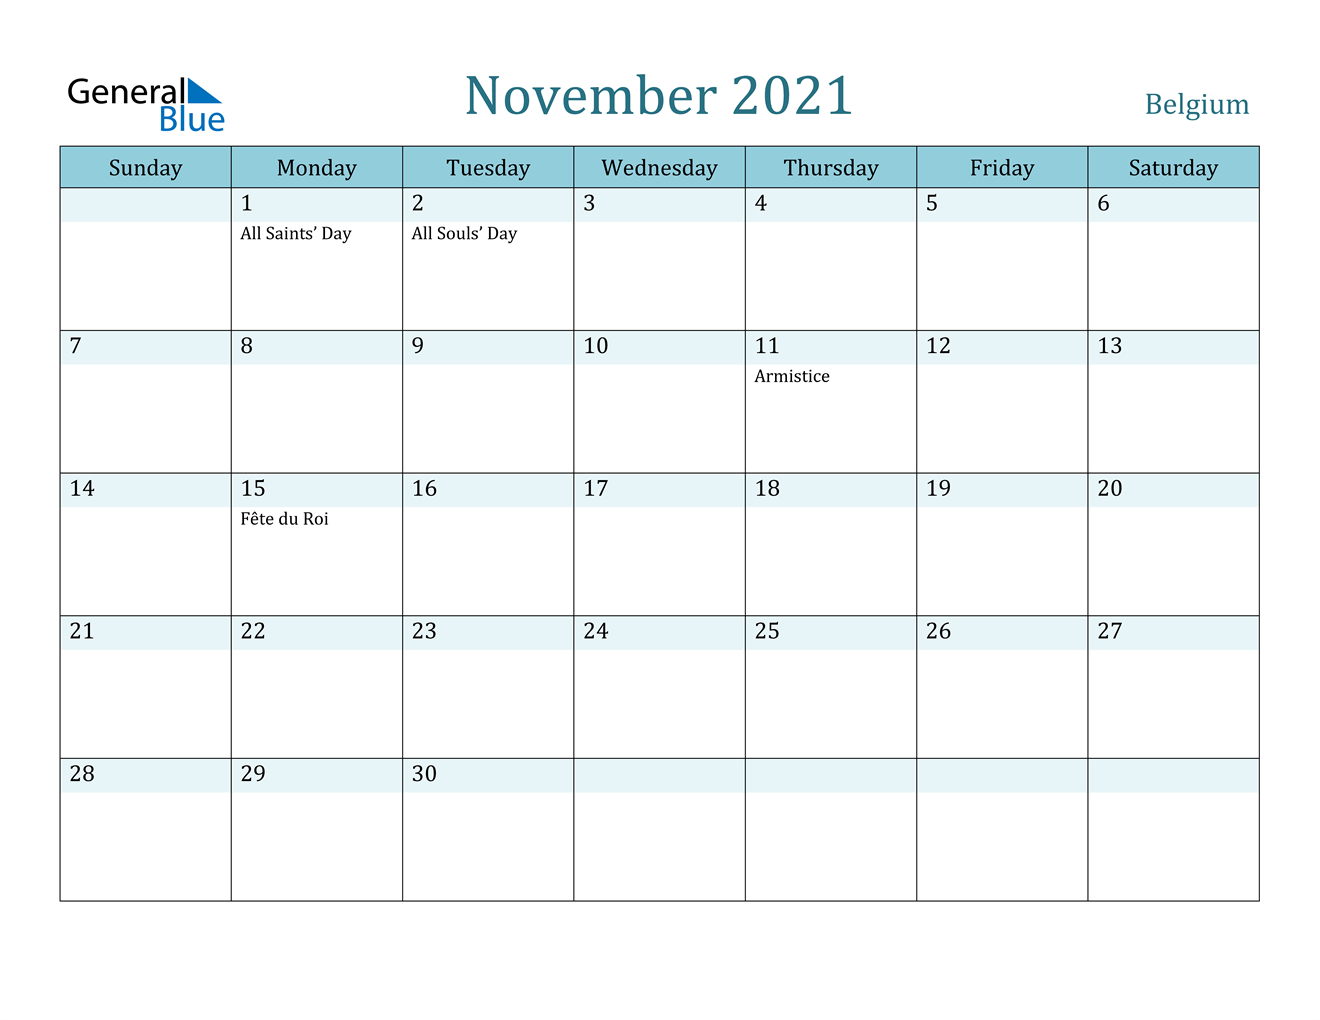 November 2021 Calendar - Belgium